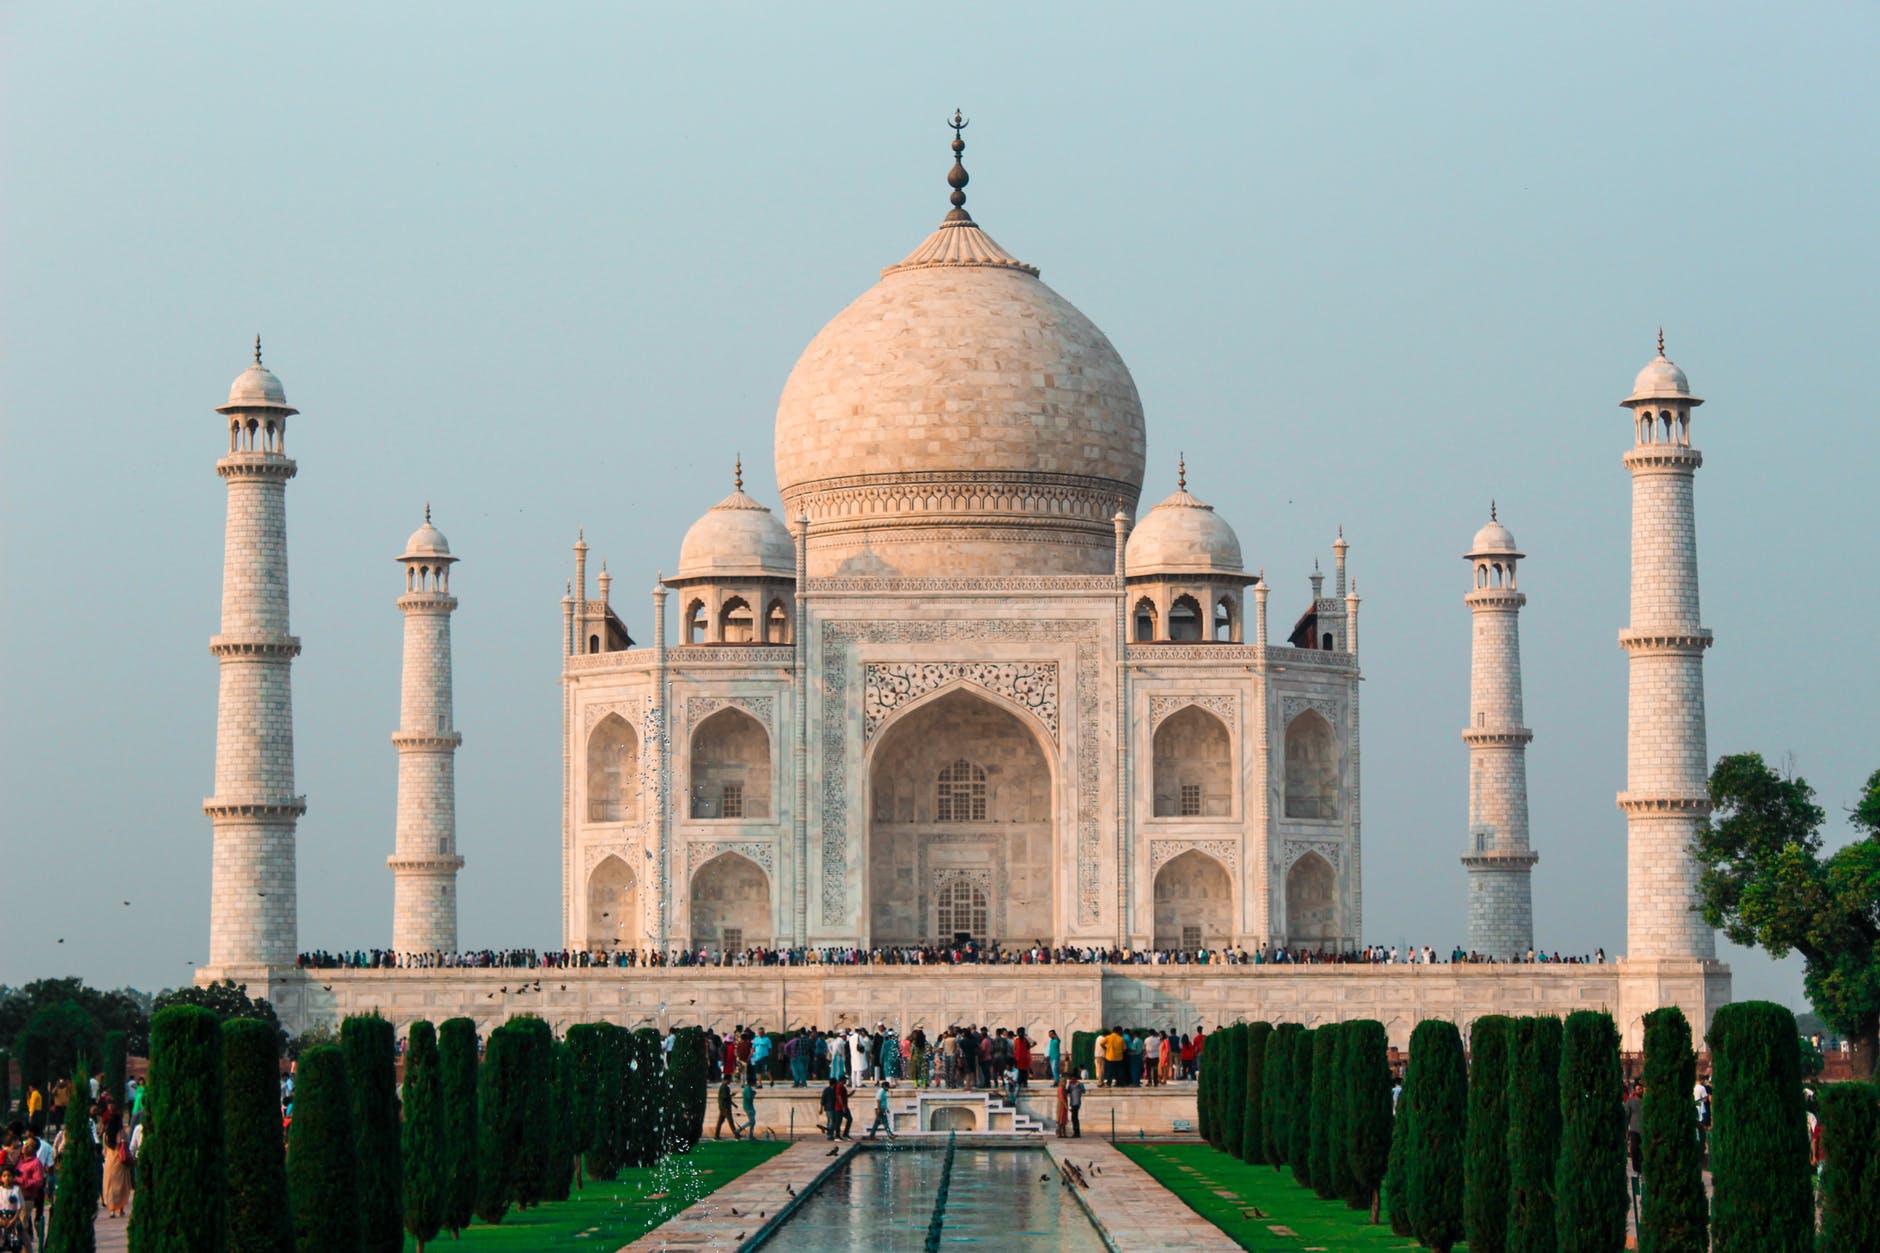 India - The Taj Mahal